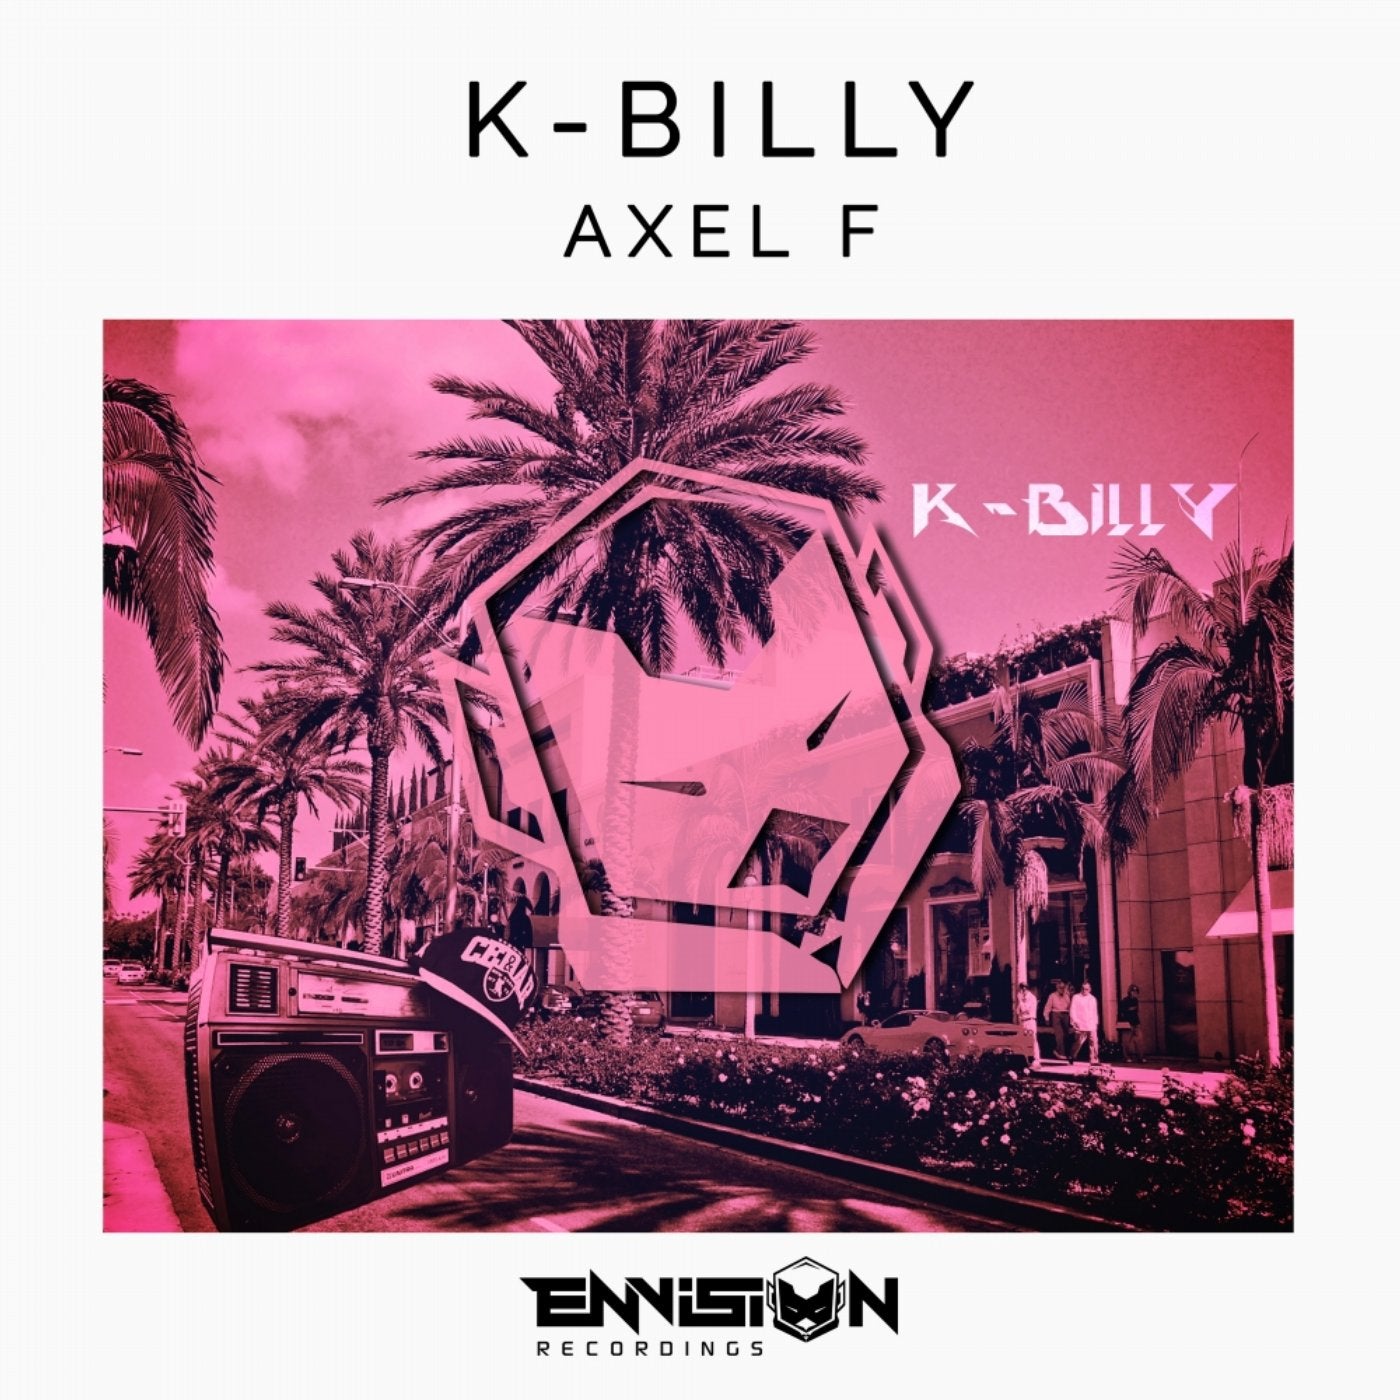 Axel f remix